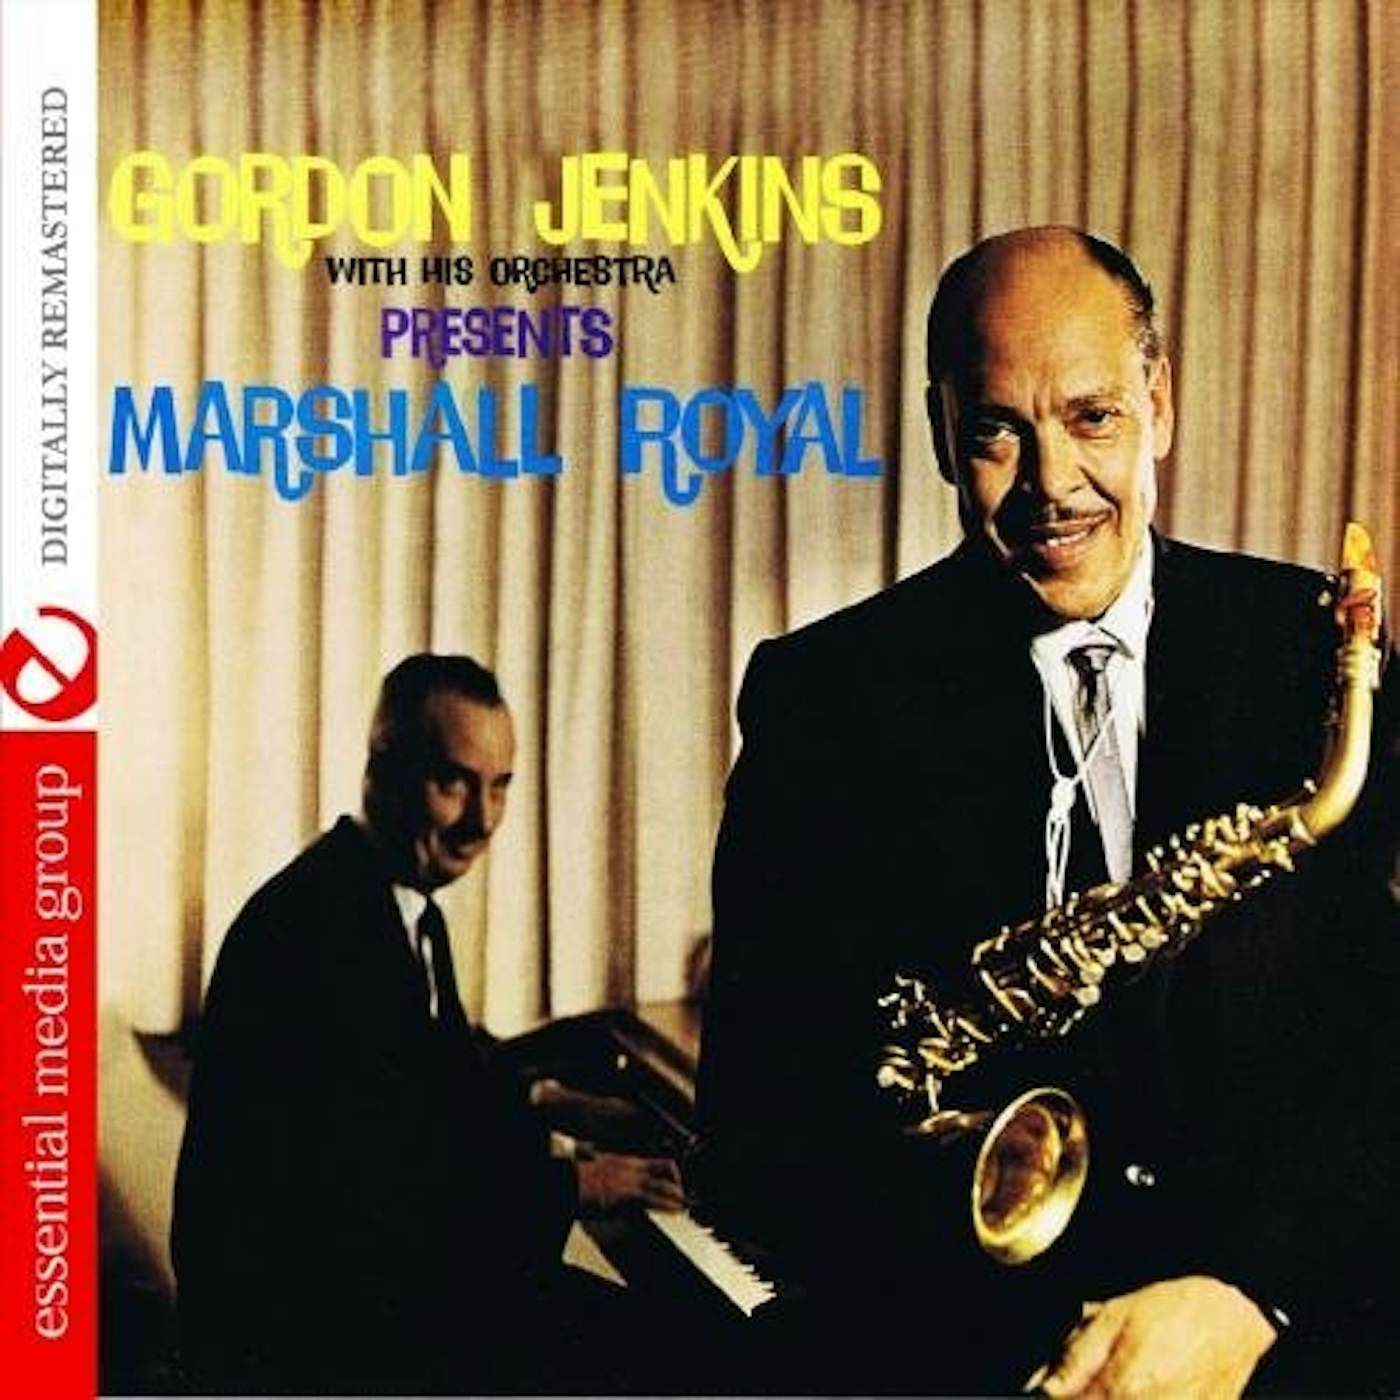 Gordon Jenkins MARSHALL ROYAL CD